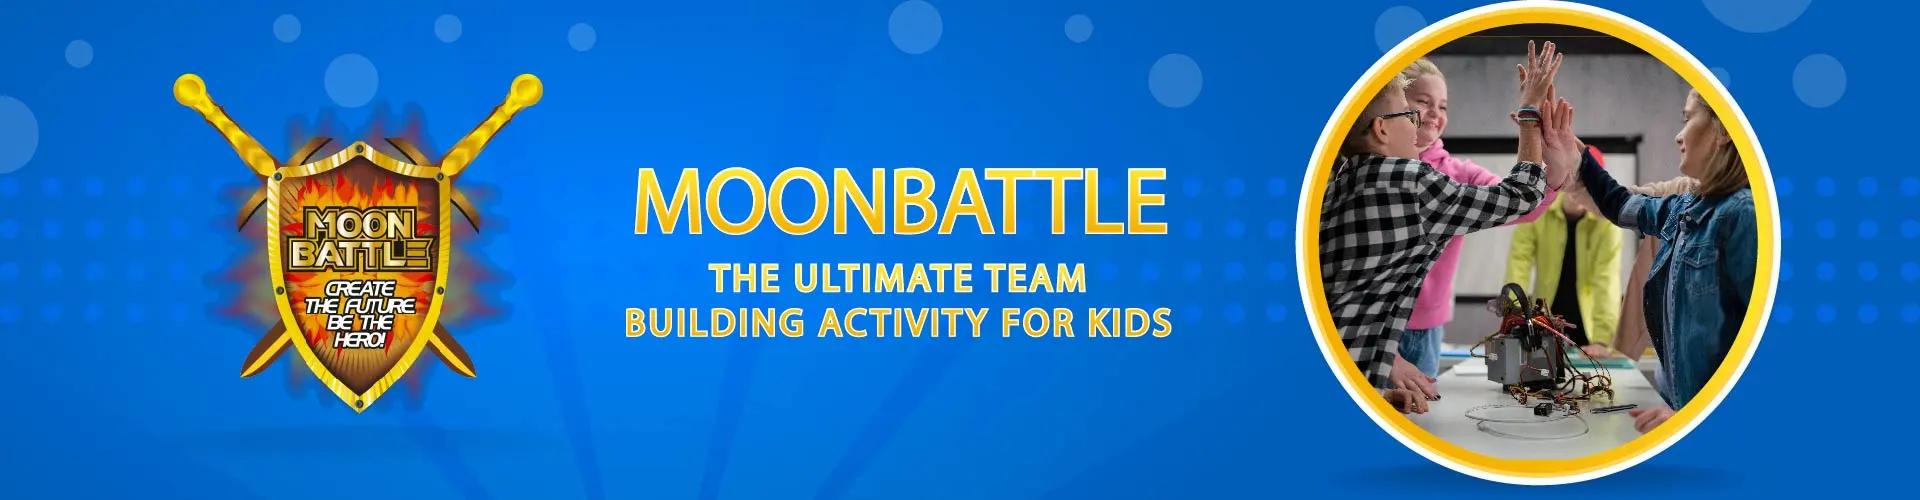 MoonBattle Promotes Teamwork